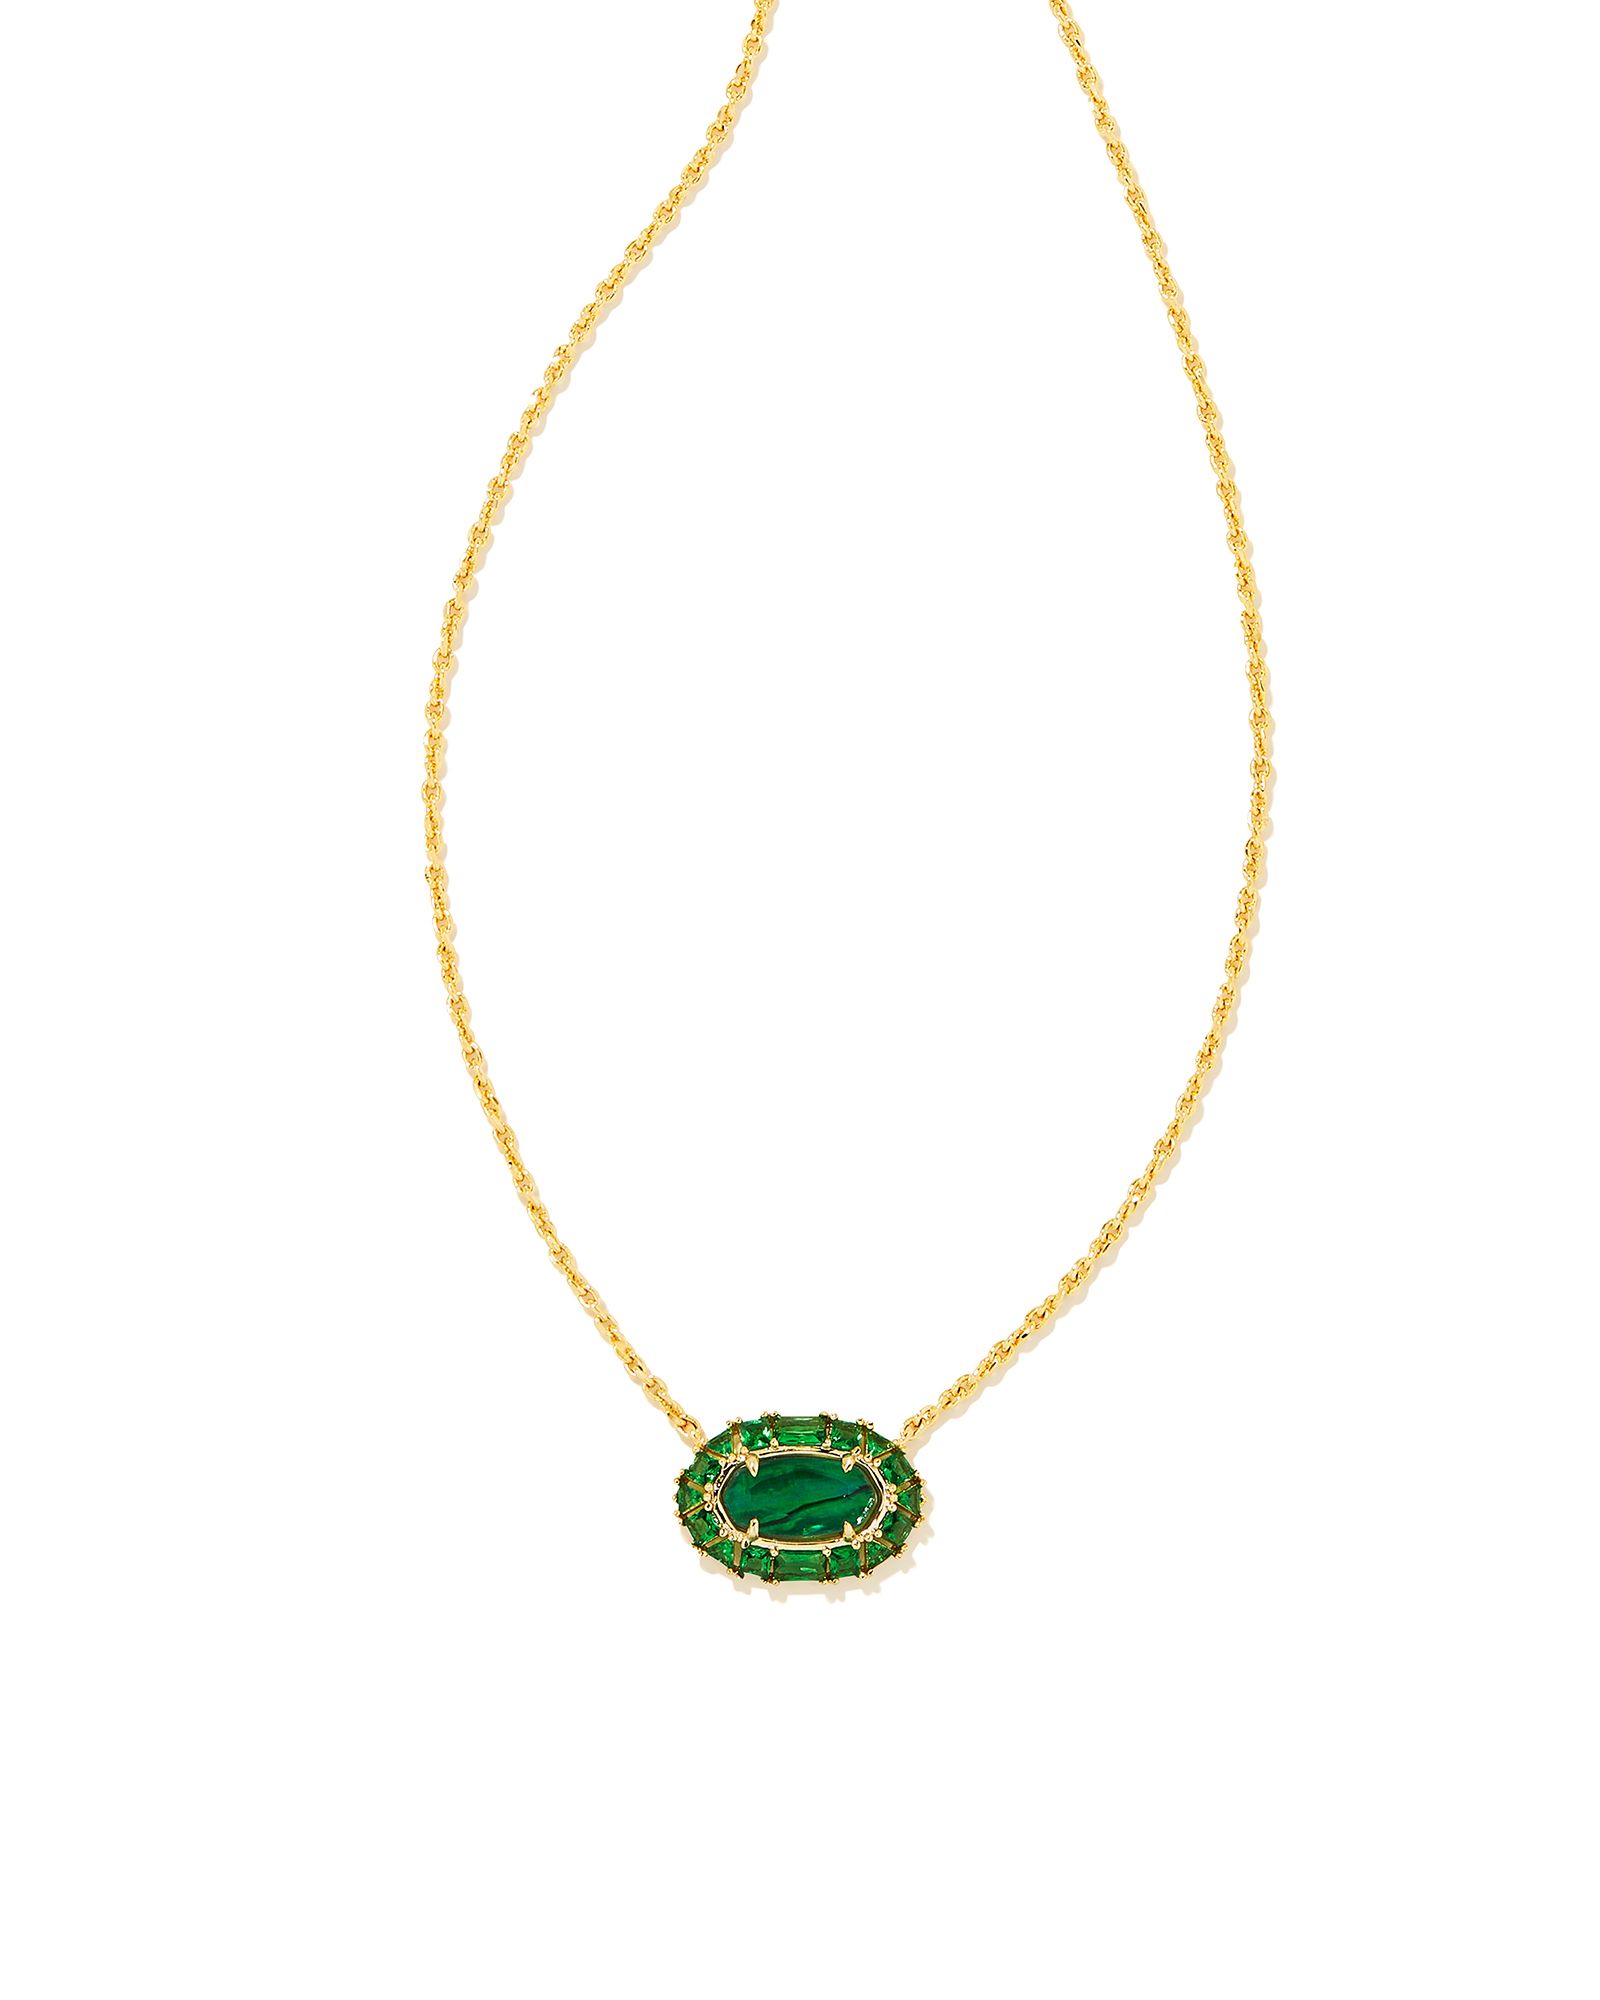 Elisa Gold Crystal Frame Short Pendant Necklace in Kelly Green Illusion | Kendra Scott | Kendra Scott